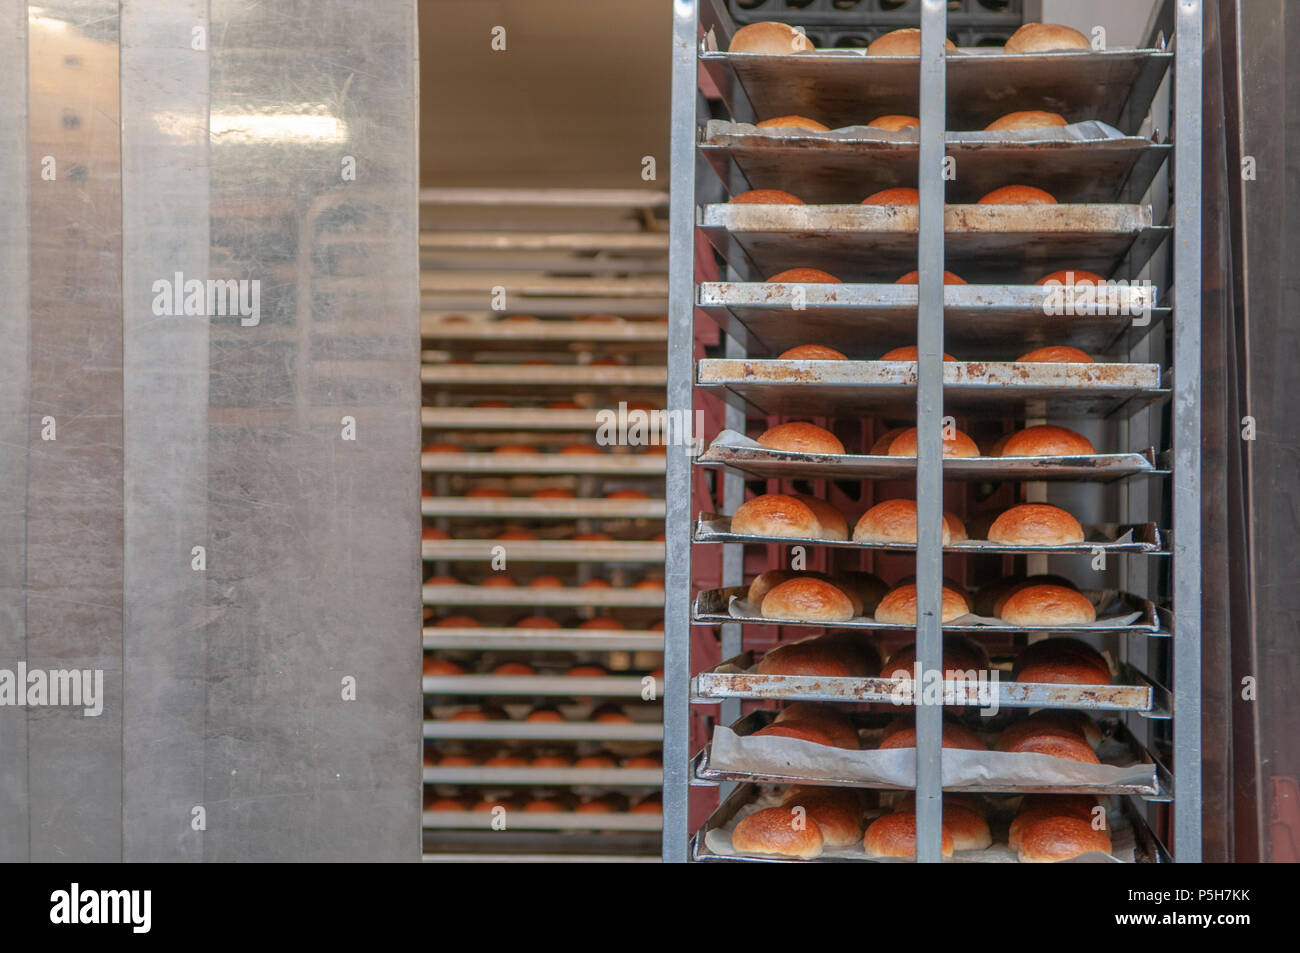 Freshly baked bread rolls on a baker's shelf trolley at a bakery. Stock Photo